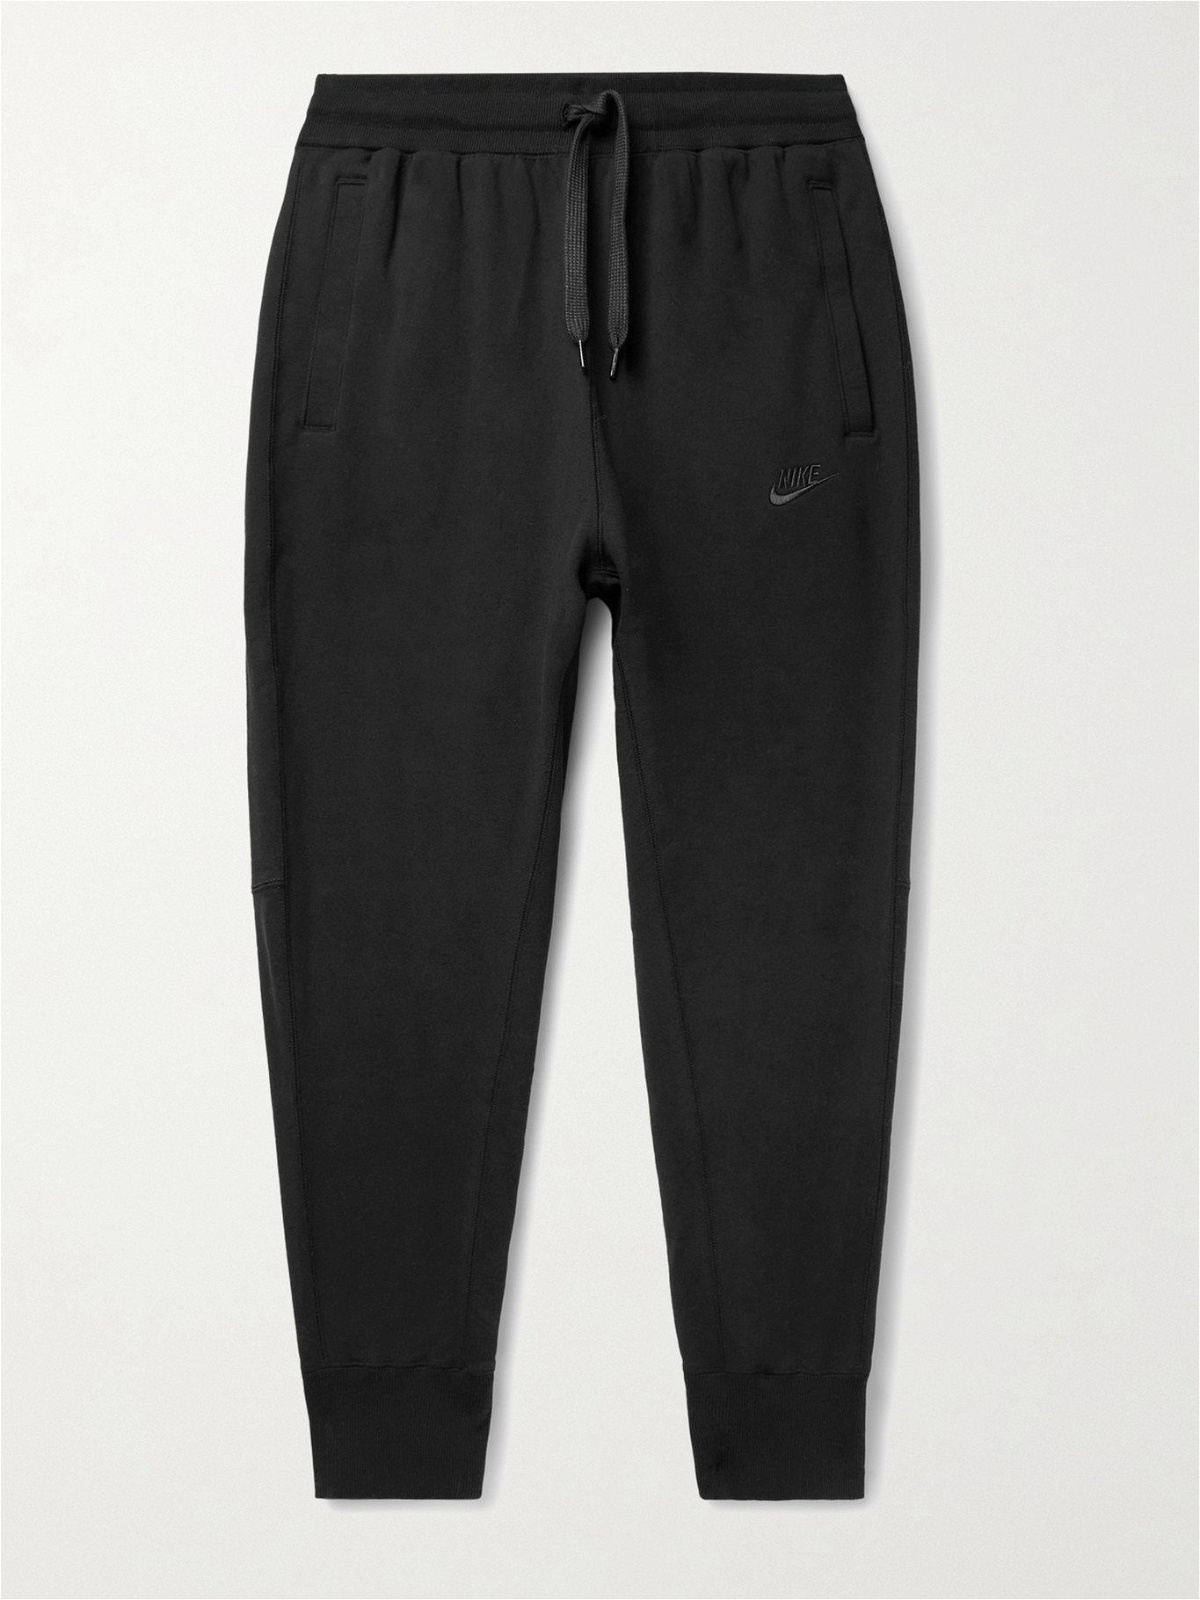 Nike Women Jogger Sweatpants Embroidered Grey Black White Logo Size Small